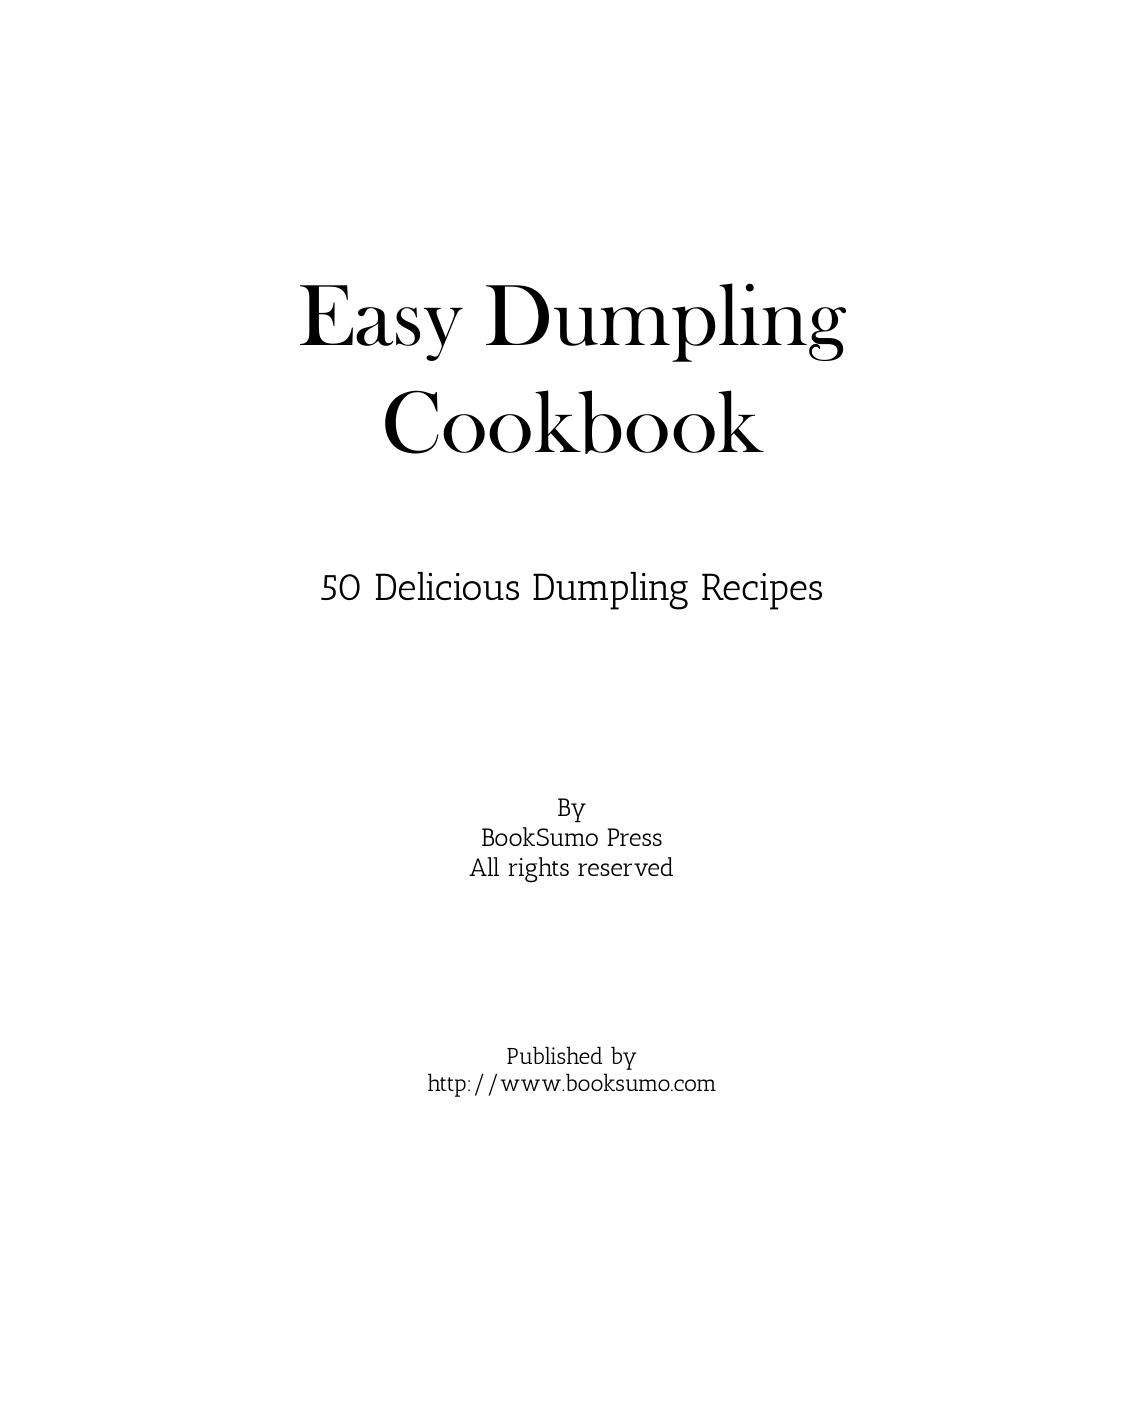 Easy Dumpling Cookbook: 50 Delicious Dumpling Recipes by BookSumo Press